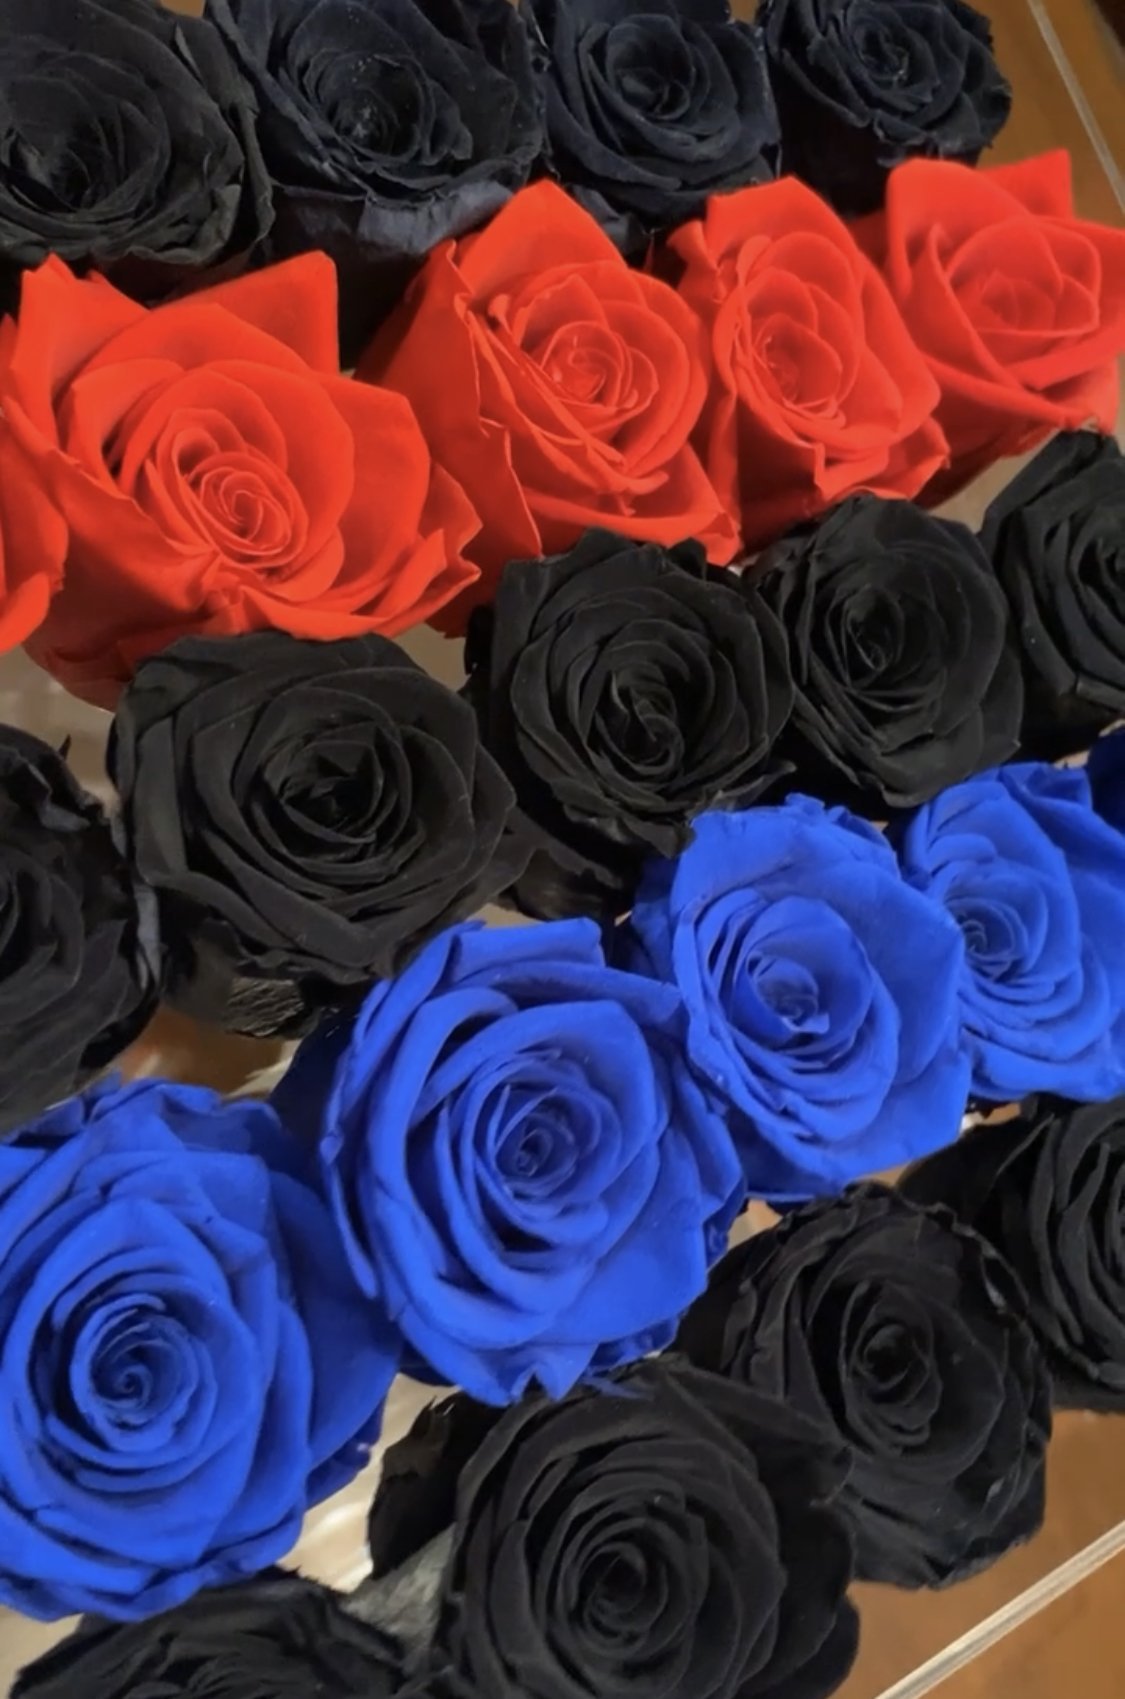 Twenty-five Preserved Roses in Clear Display - Juliet's Roses